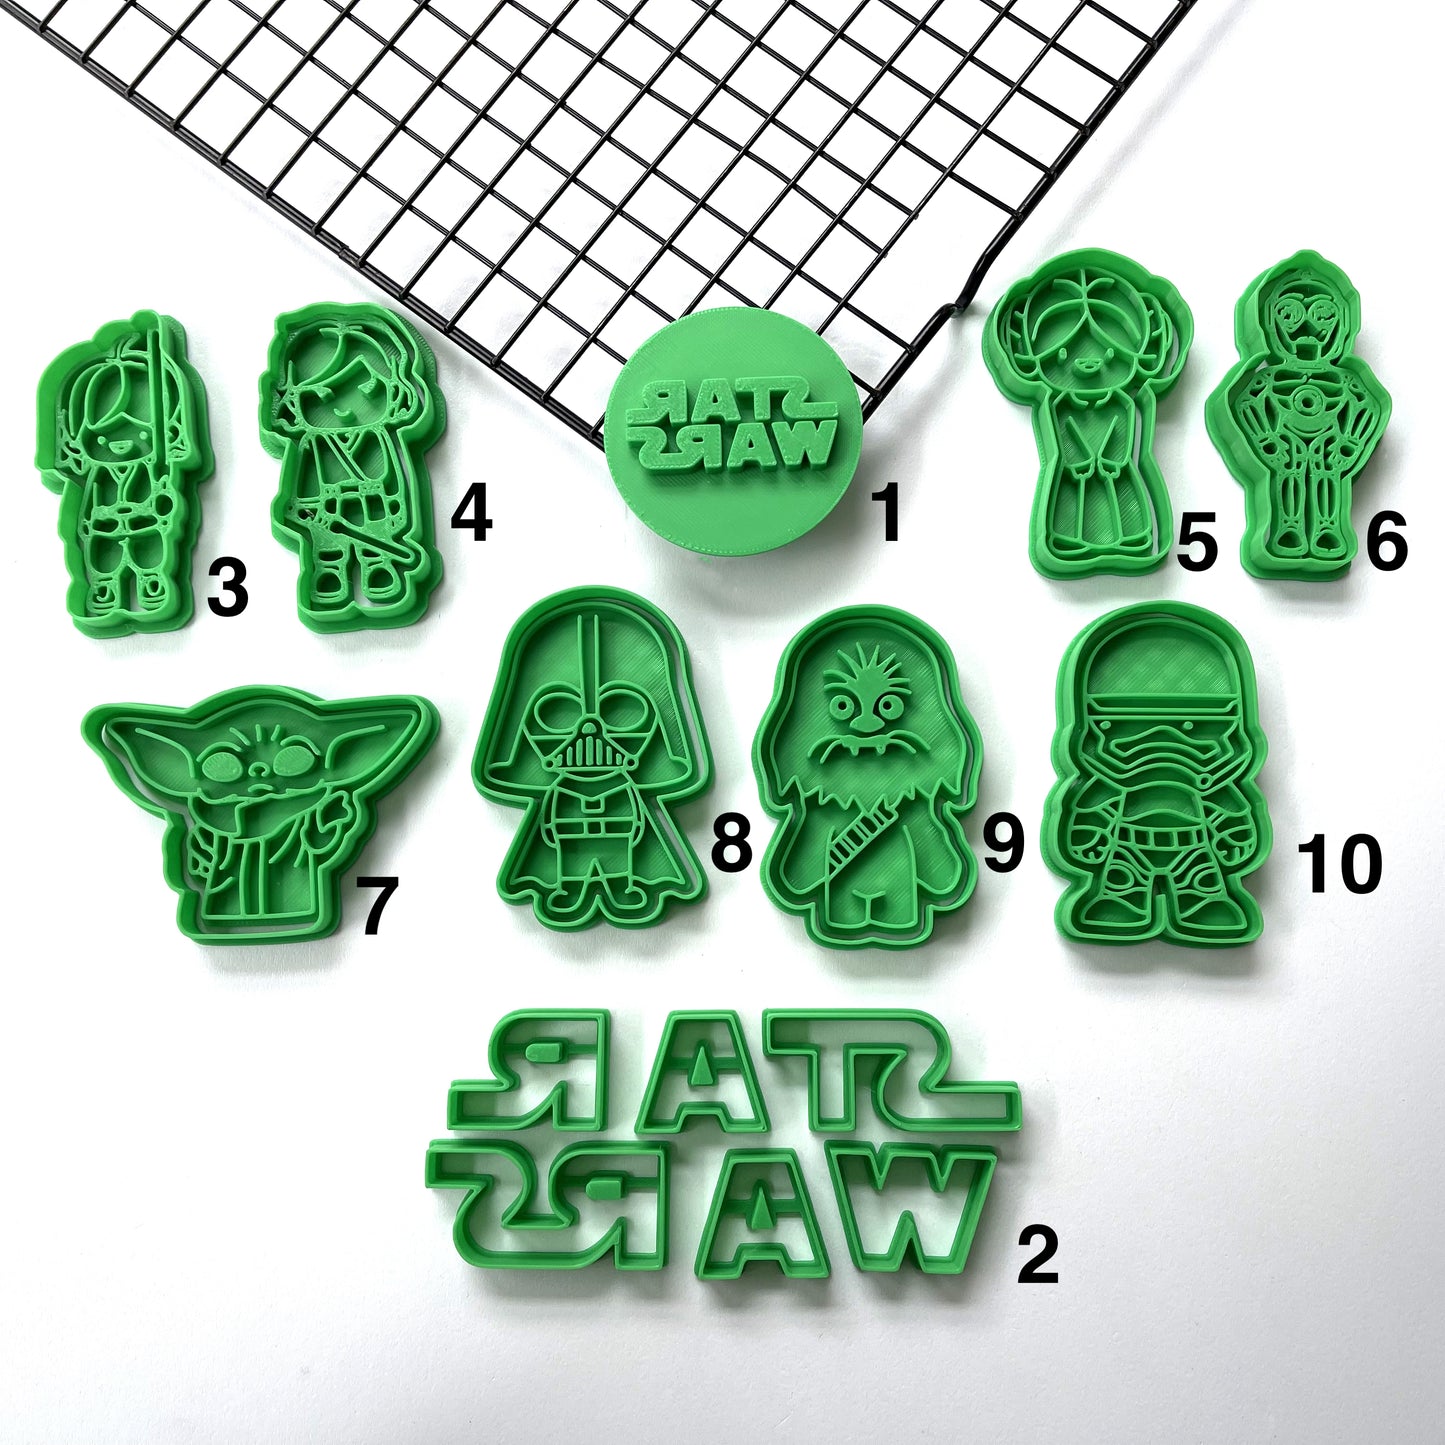 Star Wars cookie cutter + stamp MEG cookie cutters